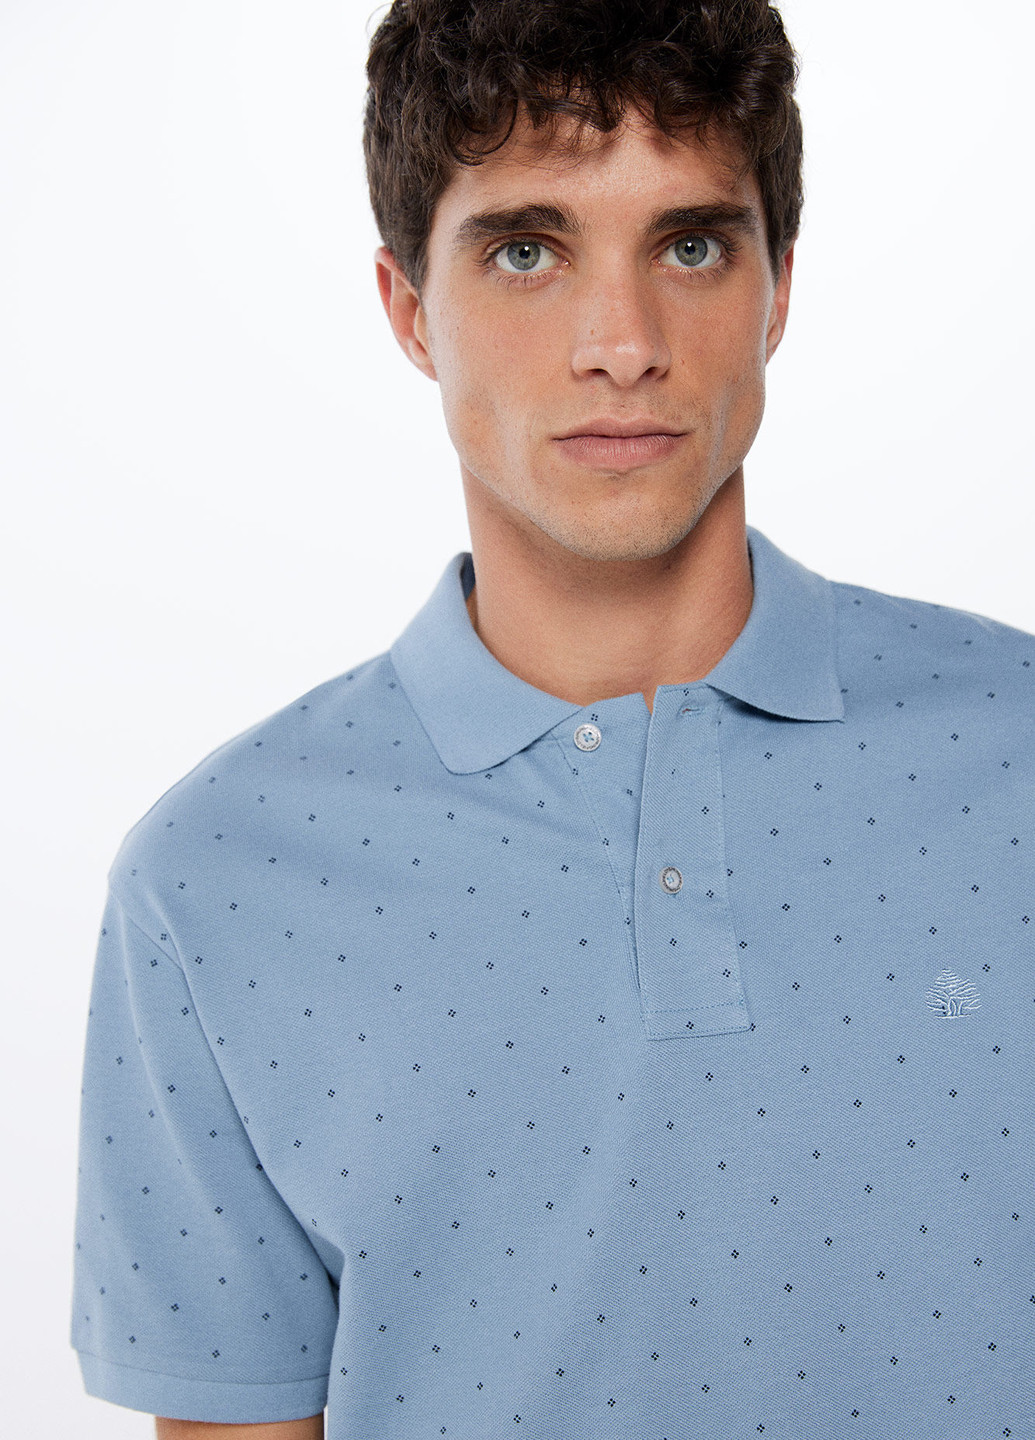 Голубой футболка-поло для мужчин Springfield с геометрическим узором